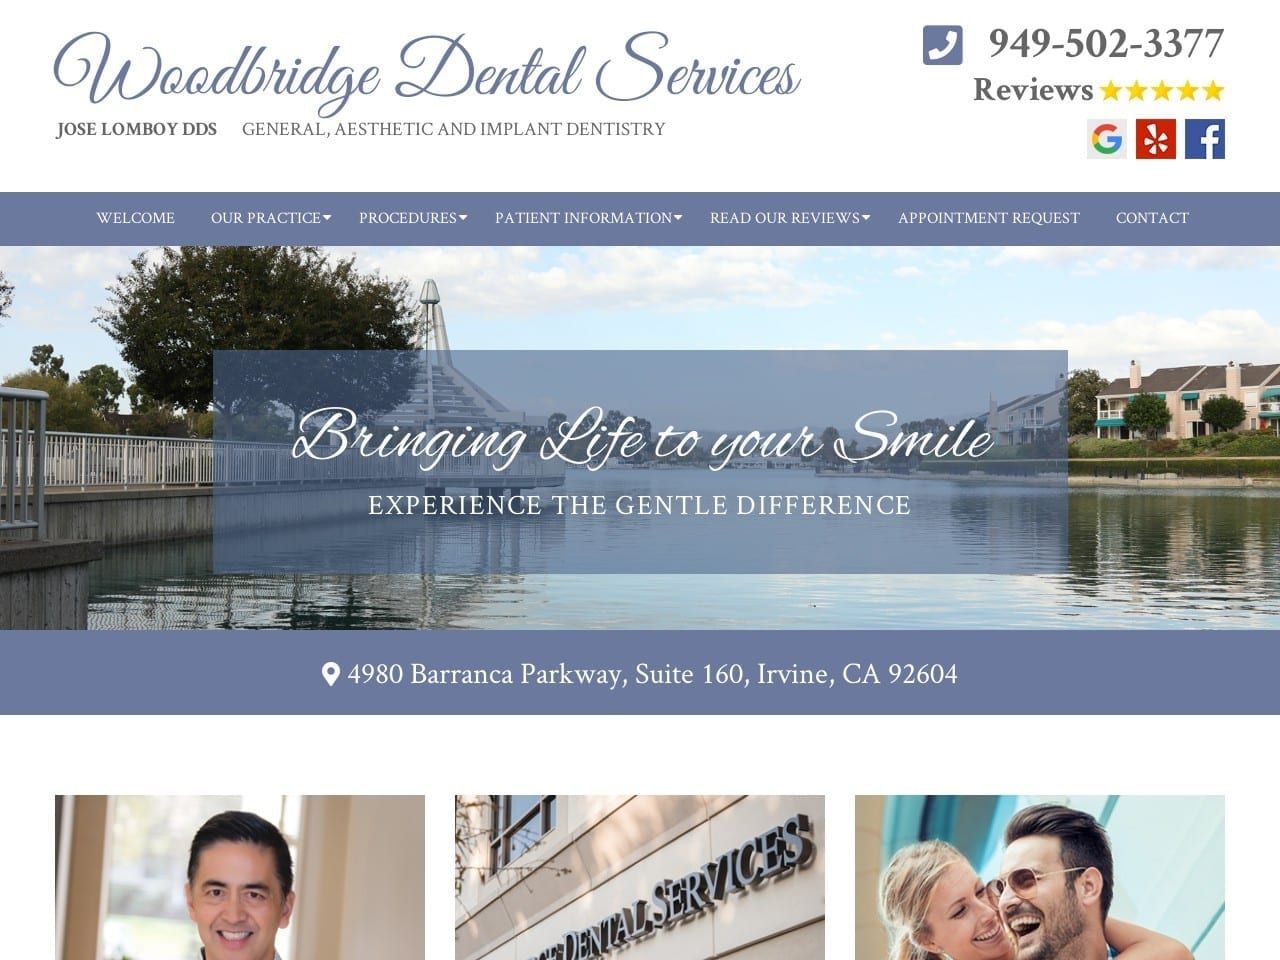 Woodbridge Dental Services Website Screenshot from woodbridgedentalservices.com